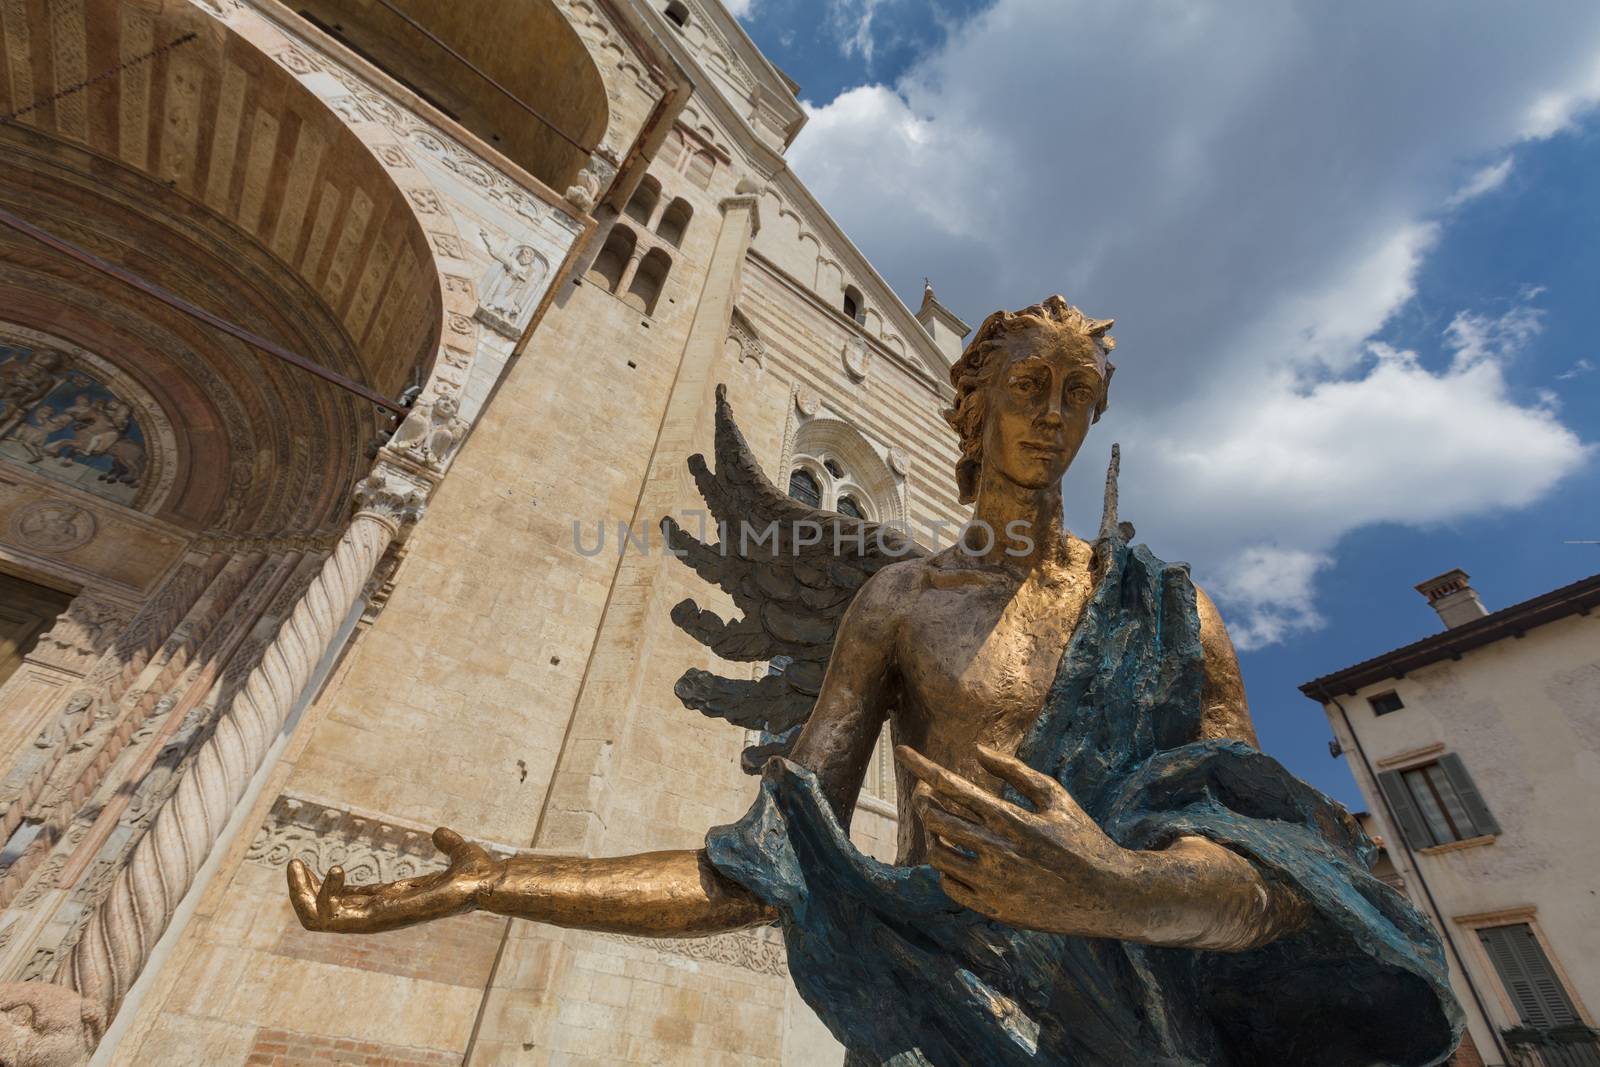 Verona, Italy, Europe, August 2019, A view of the Duomo Cattedrale di Santa Maria Matricolare